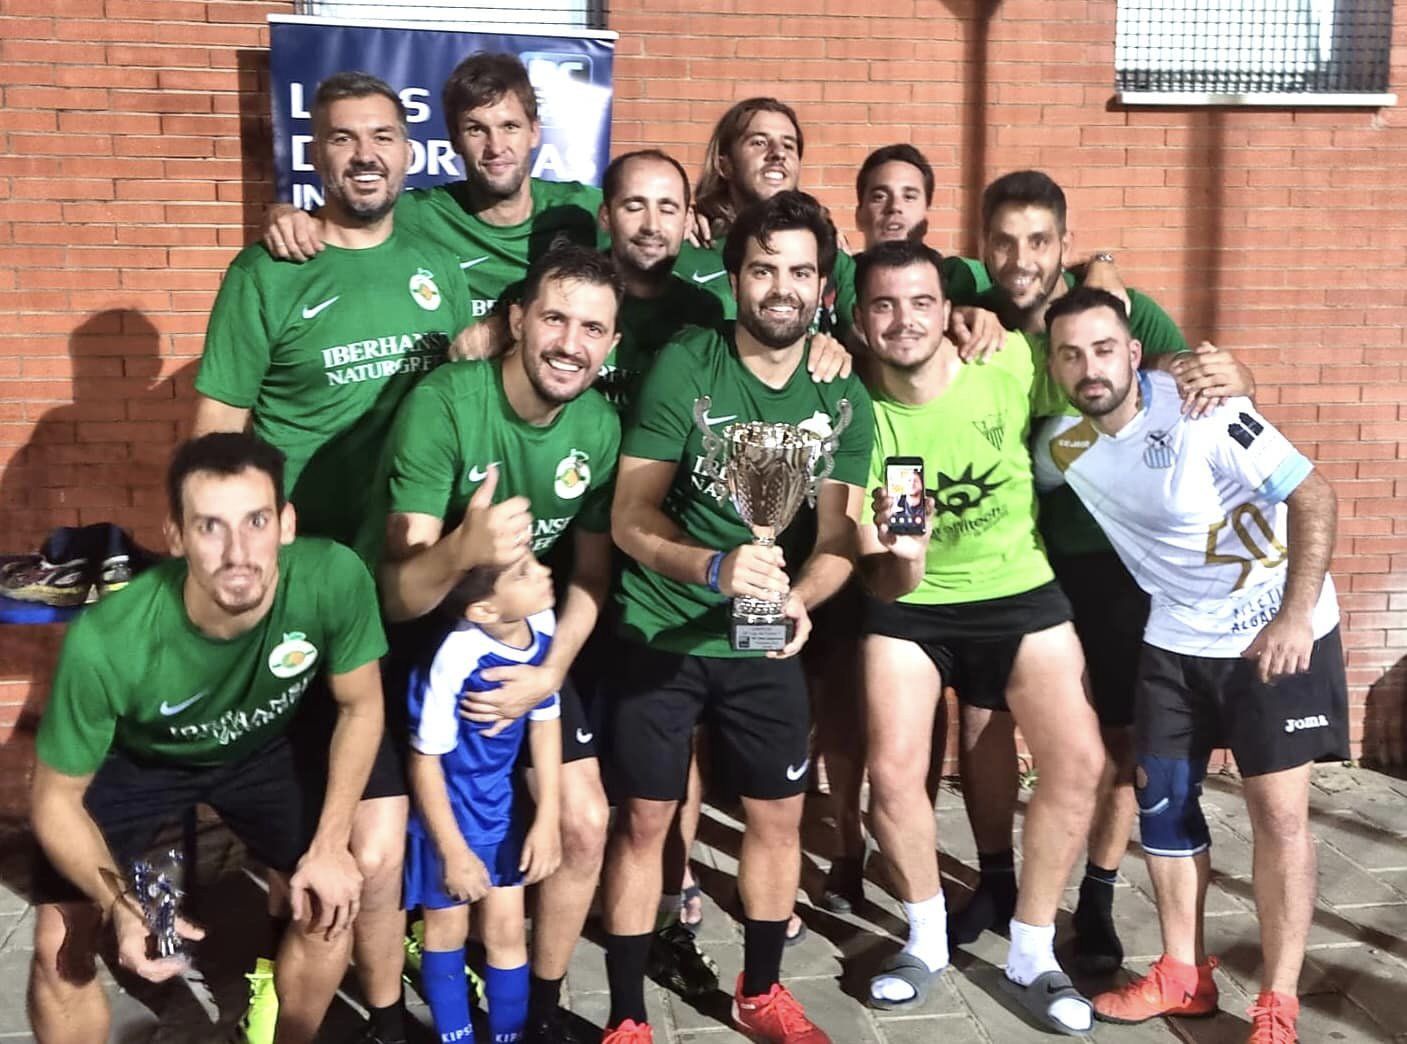 IBERHANSE- NATURGREEN se proclama campeón inédito de la Liga de Fútbol 7 RC Inter-empresas de Primavera 2022 en Sevilla al vencer a Deloitte